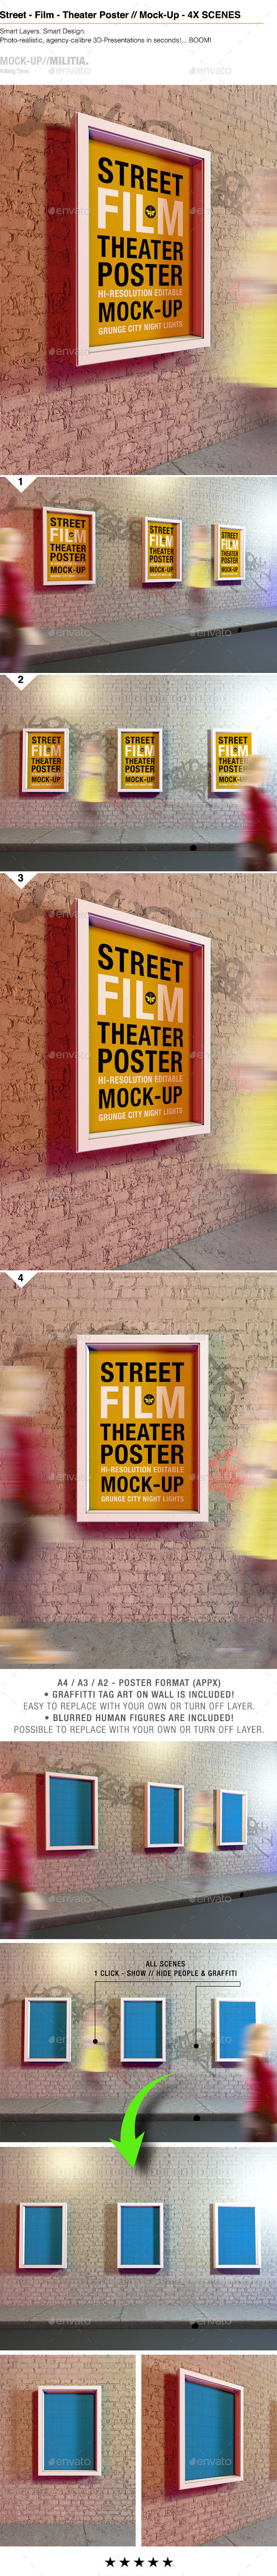 Street film poster theater poster citysites mock up prvw